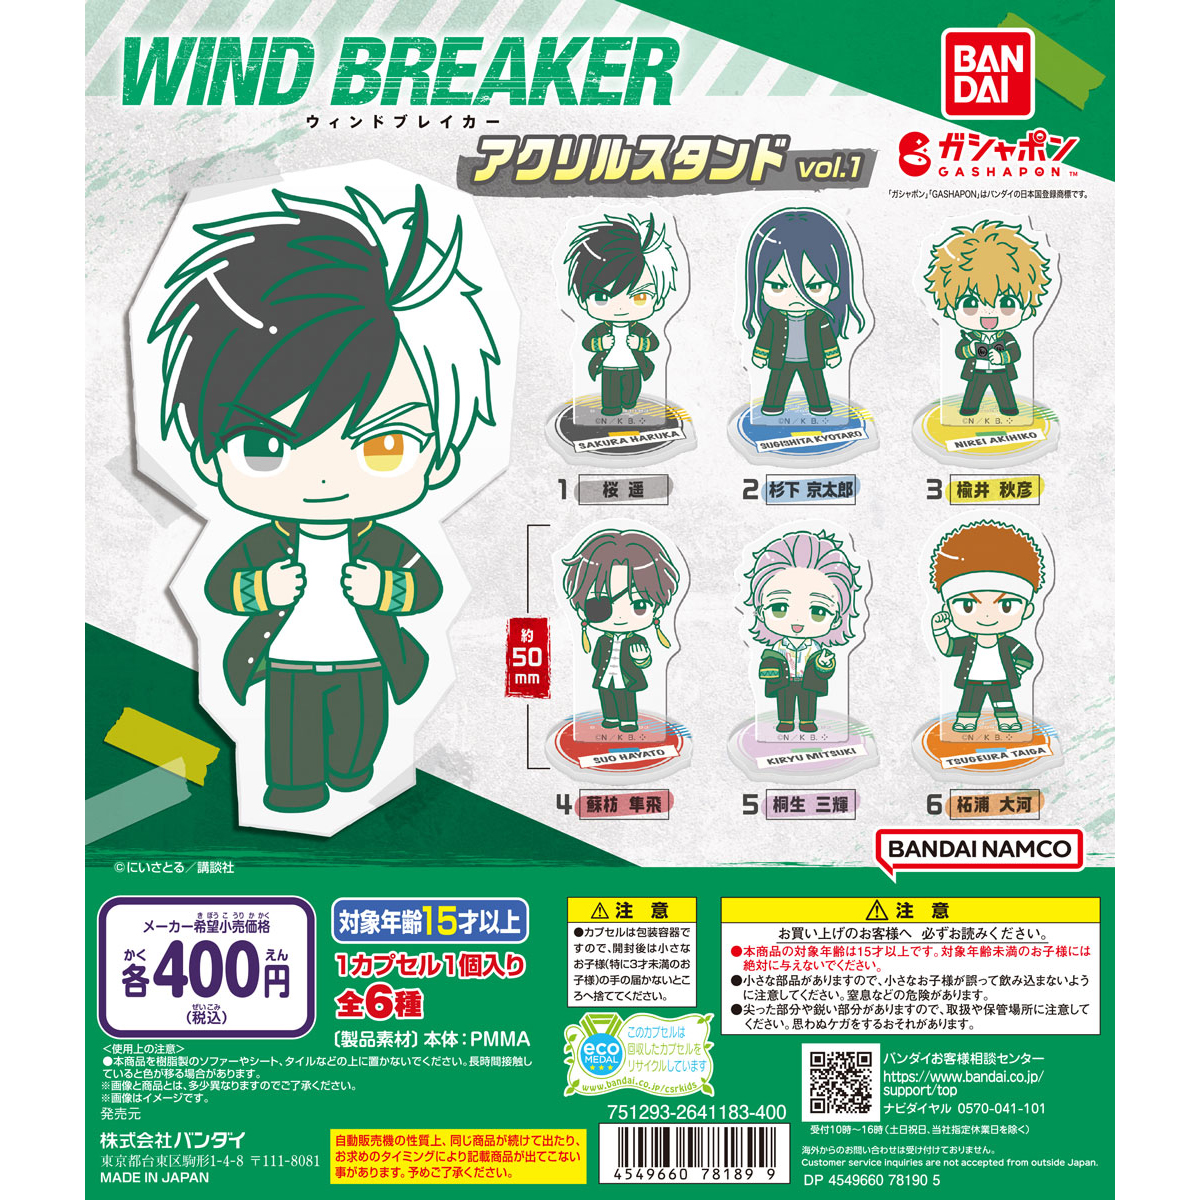 WIND BREAKER アクリルスタンド vol.1 | ナムコパークス オンライン 